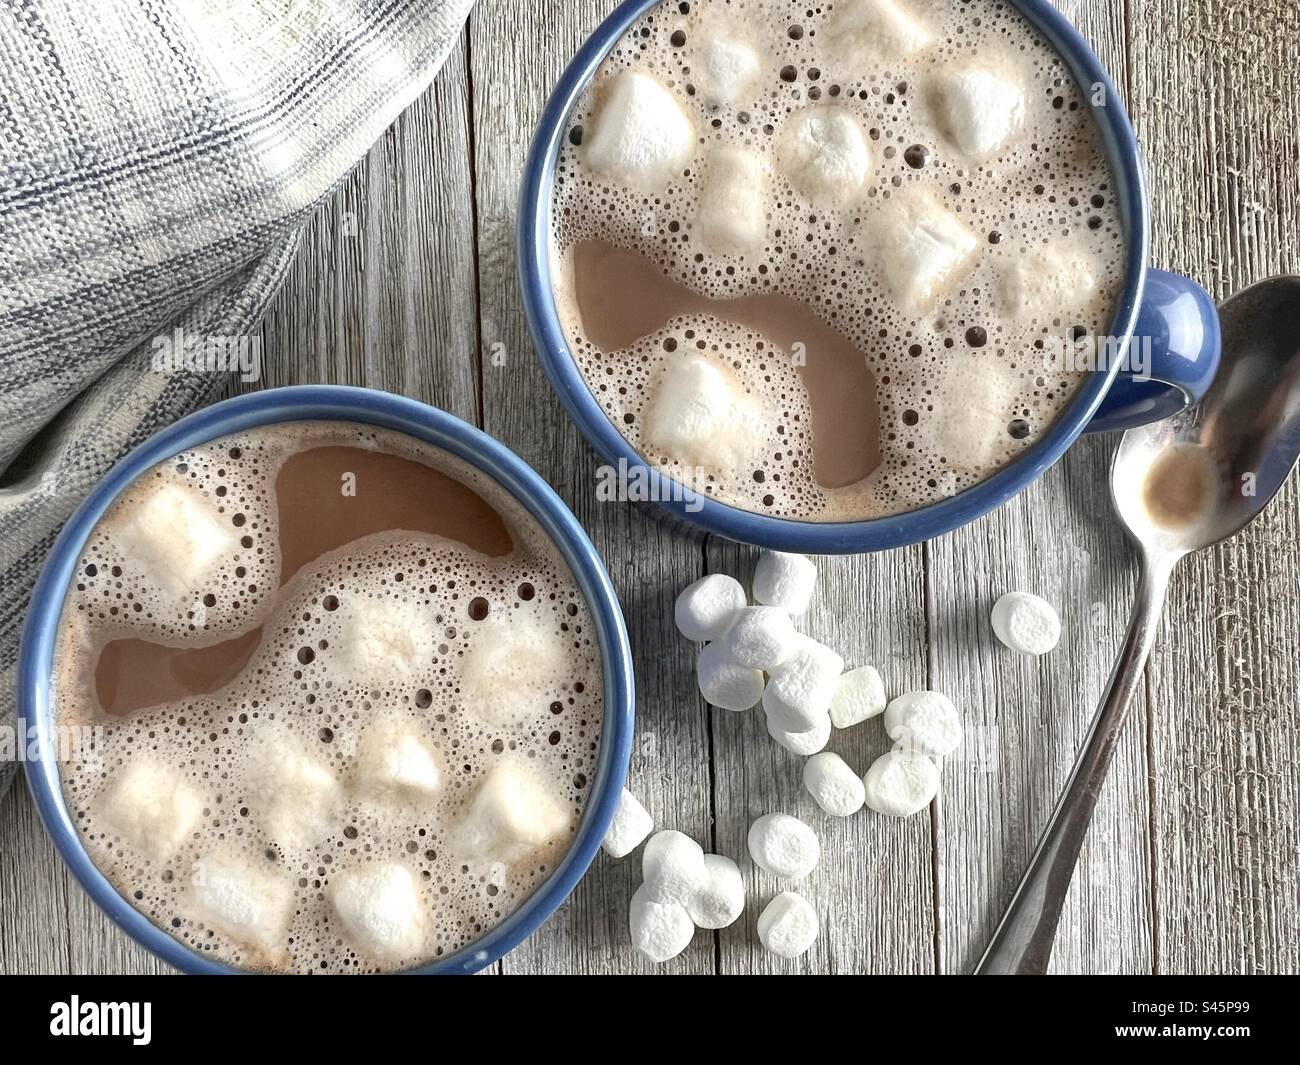 Hot chocolate in blue mugs Stock Photo